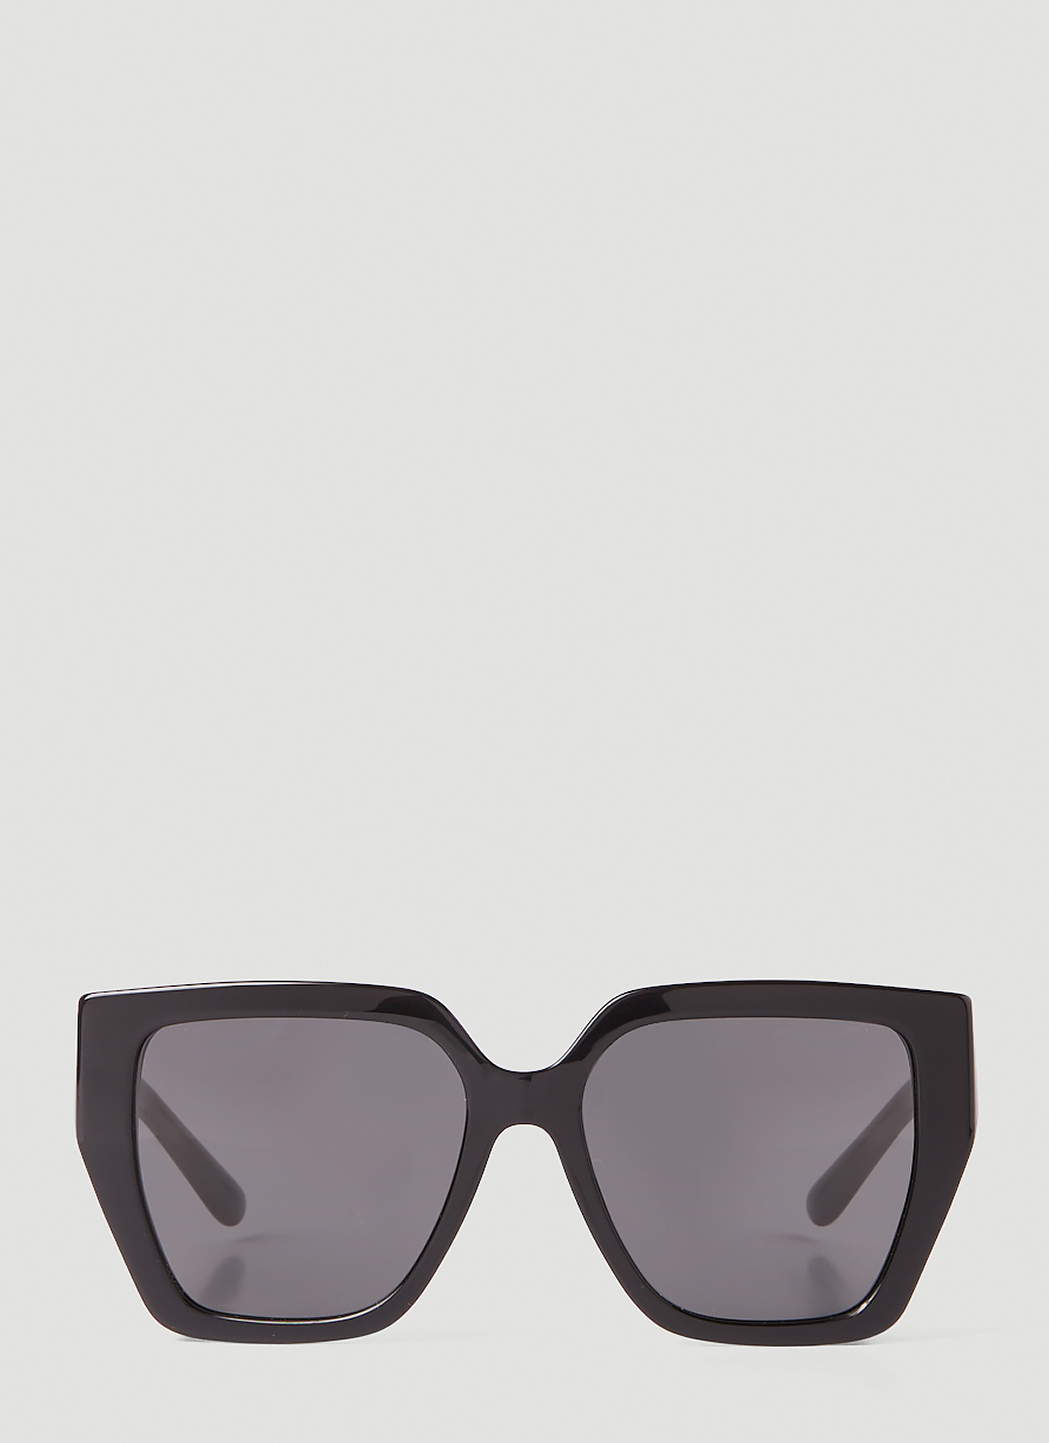 Dolce&Gabbana Crossed Sunglasses